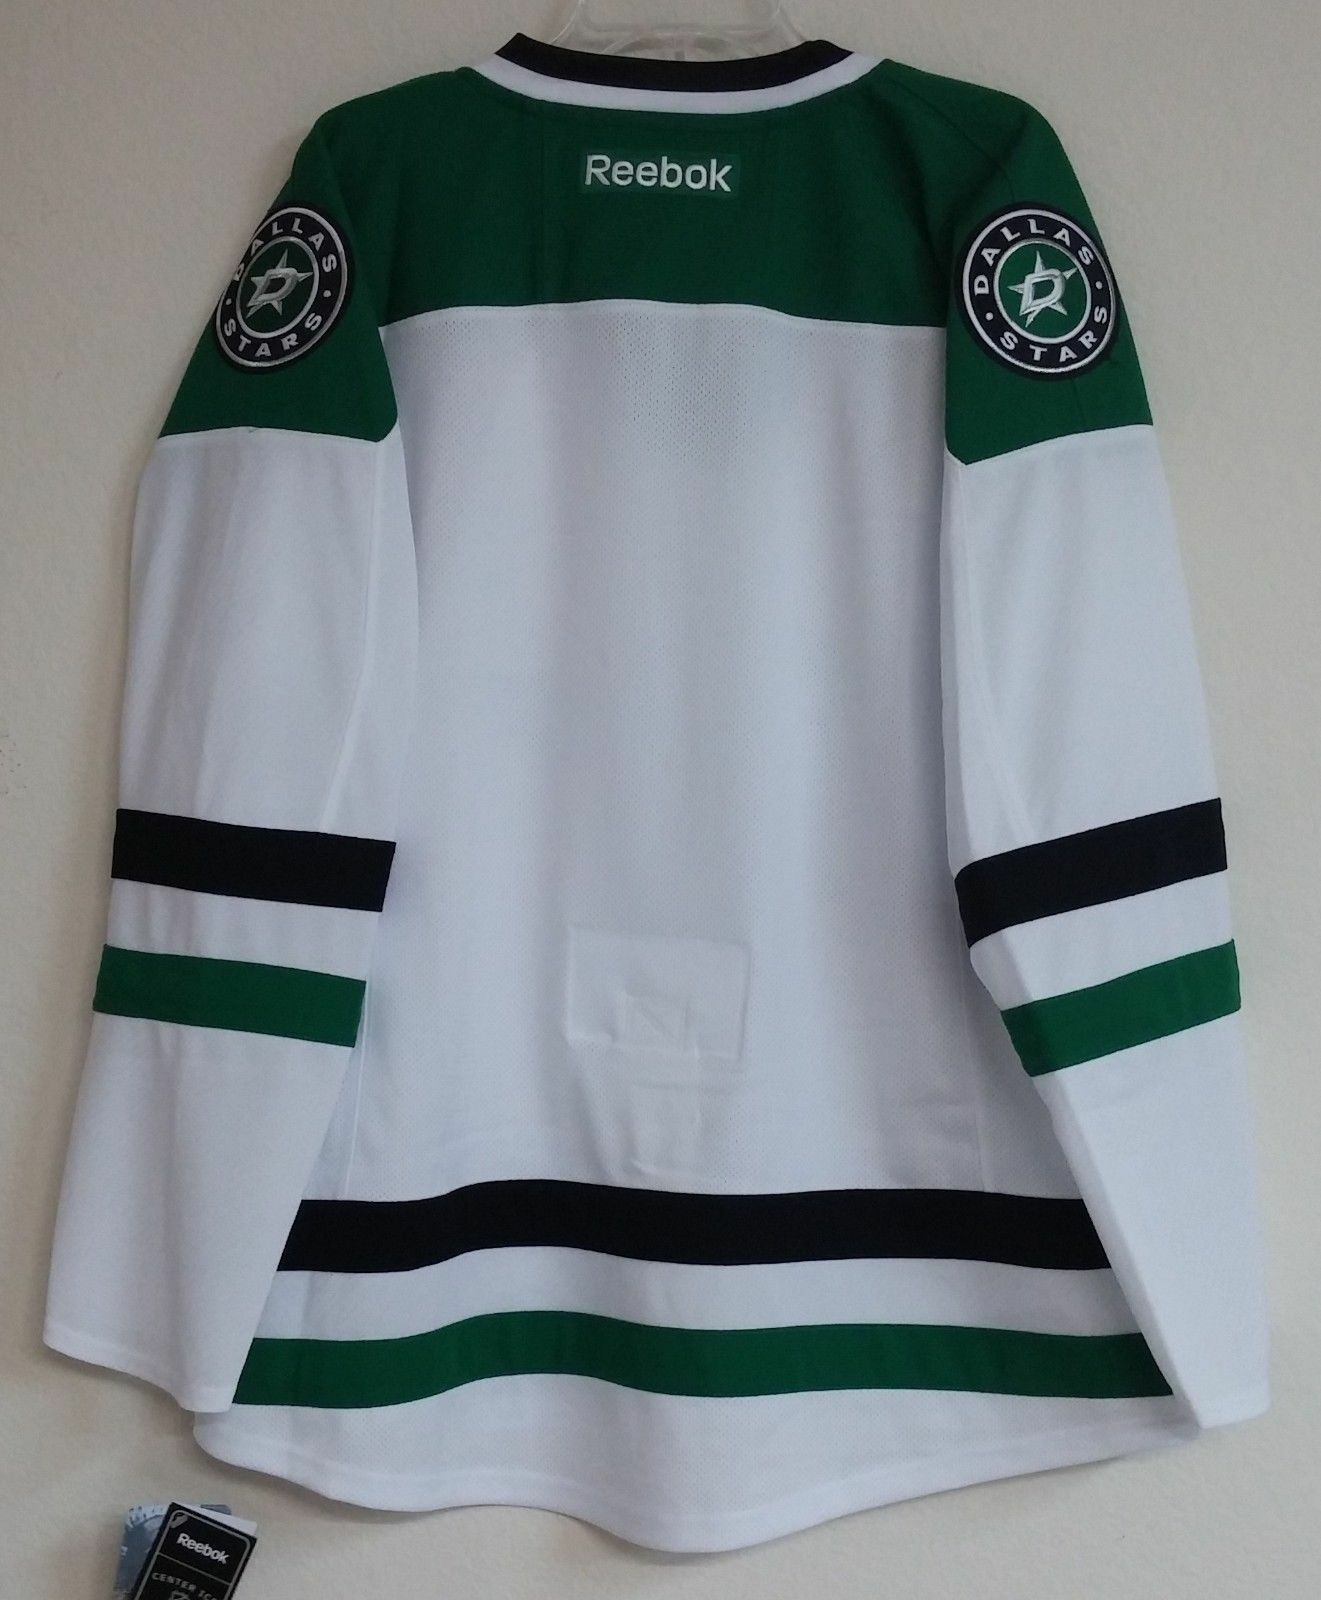 DALLAS STARS reebok NHL authentic EDGE 1.0 hockey jersey away-white size 56 NEW Image 2